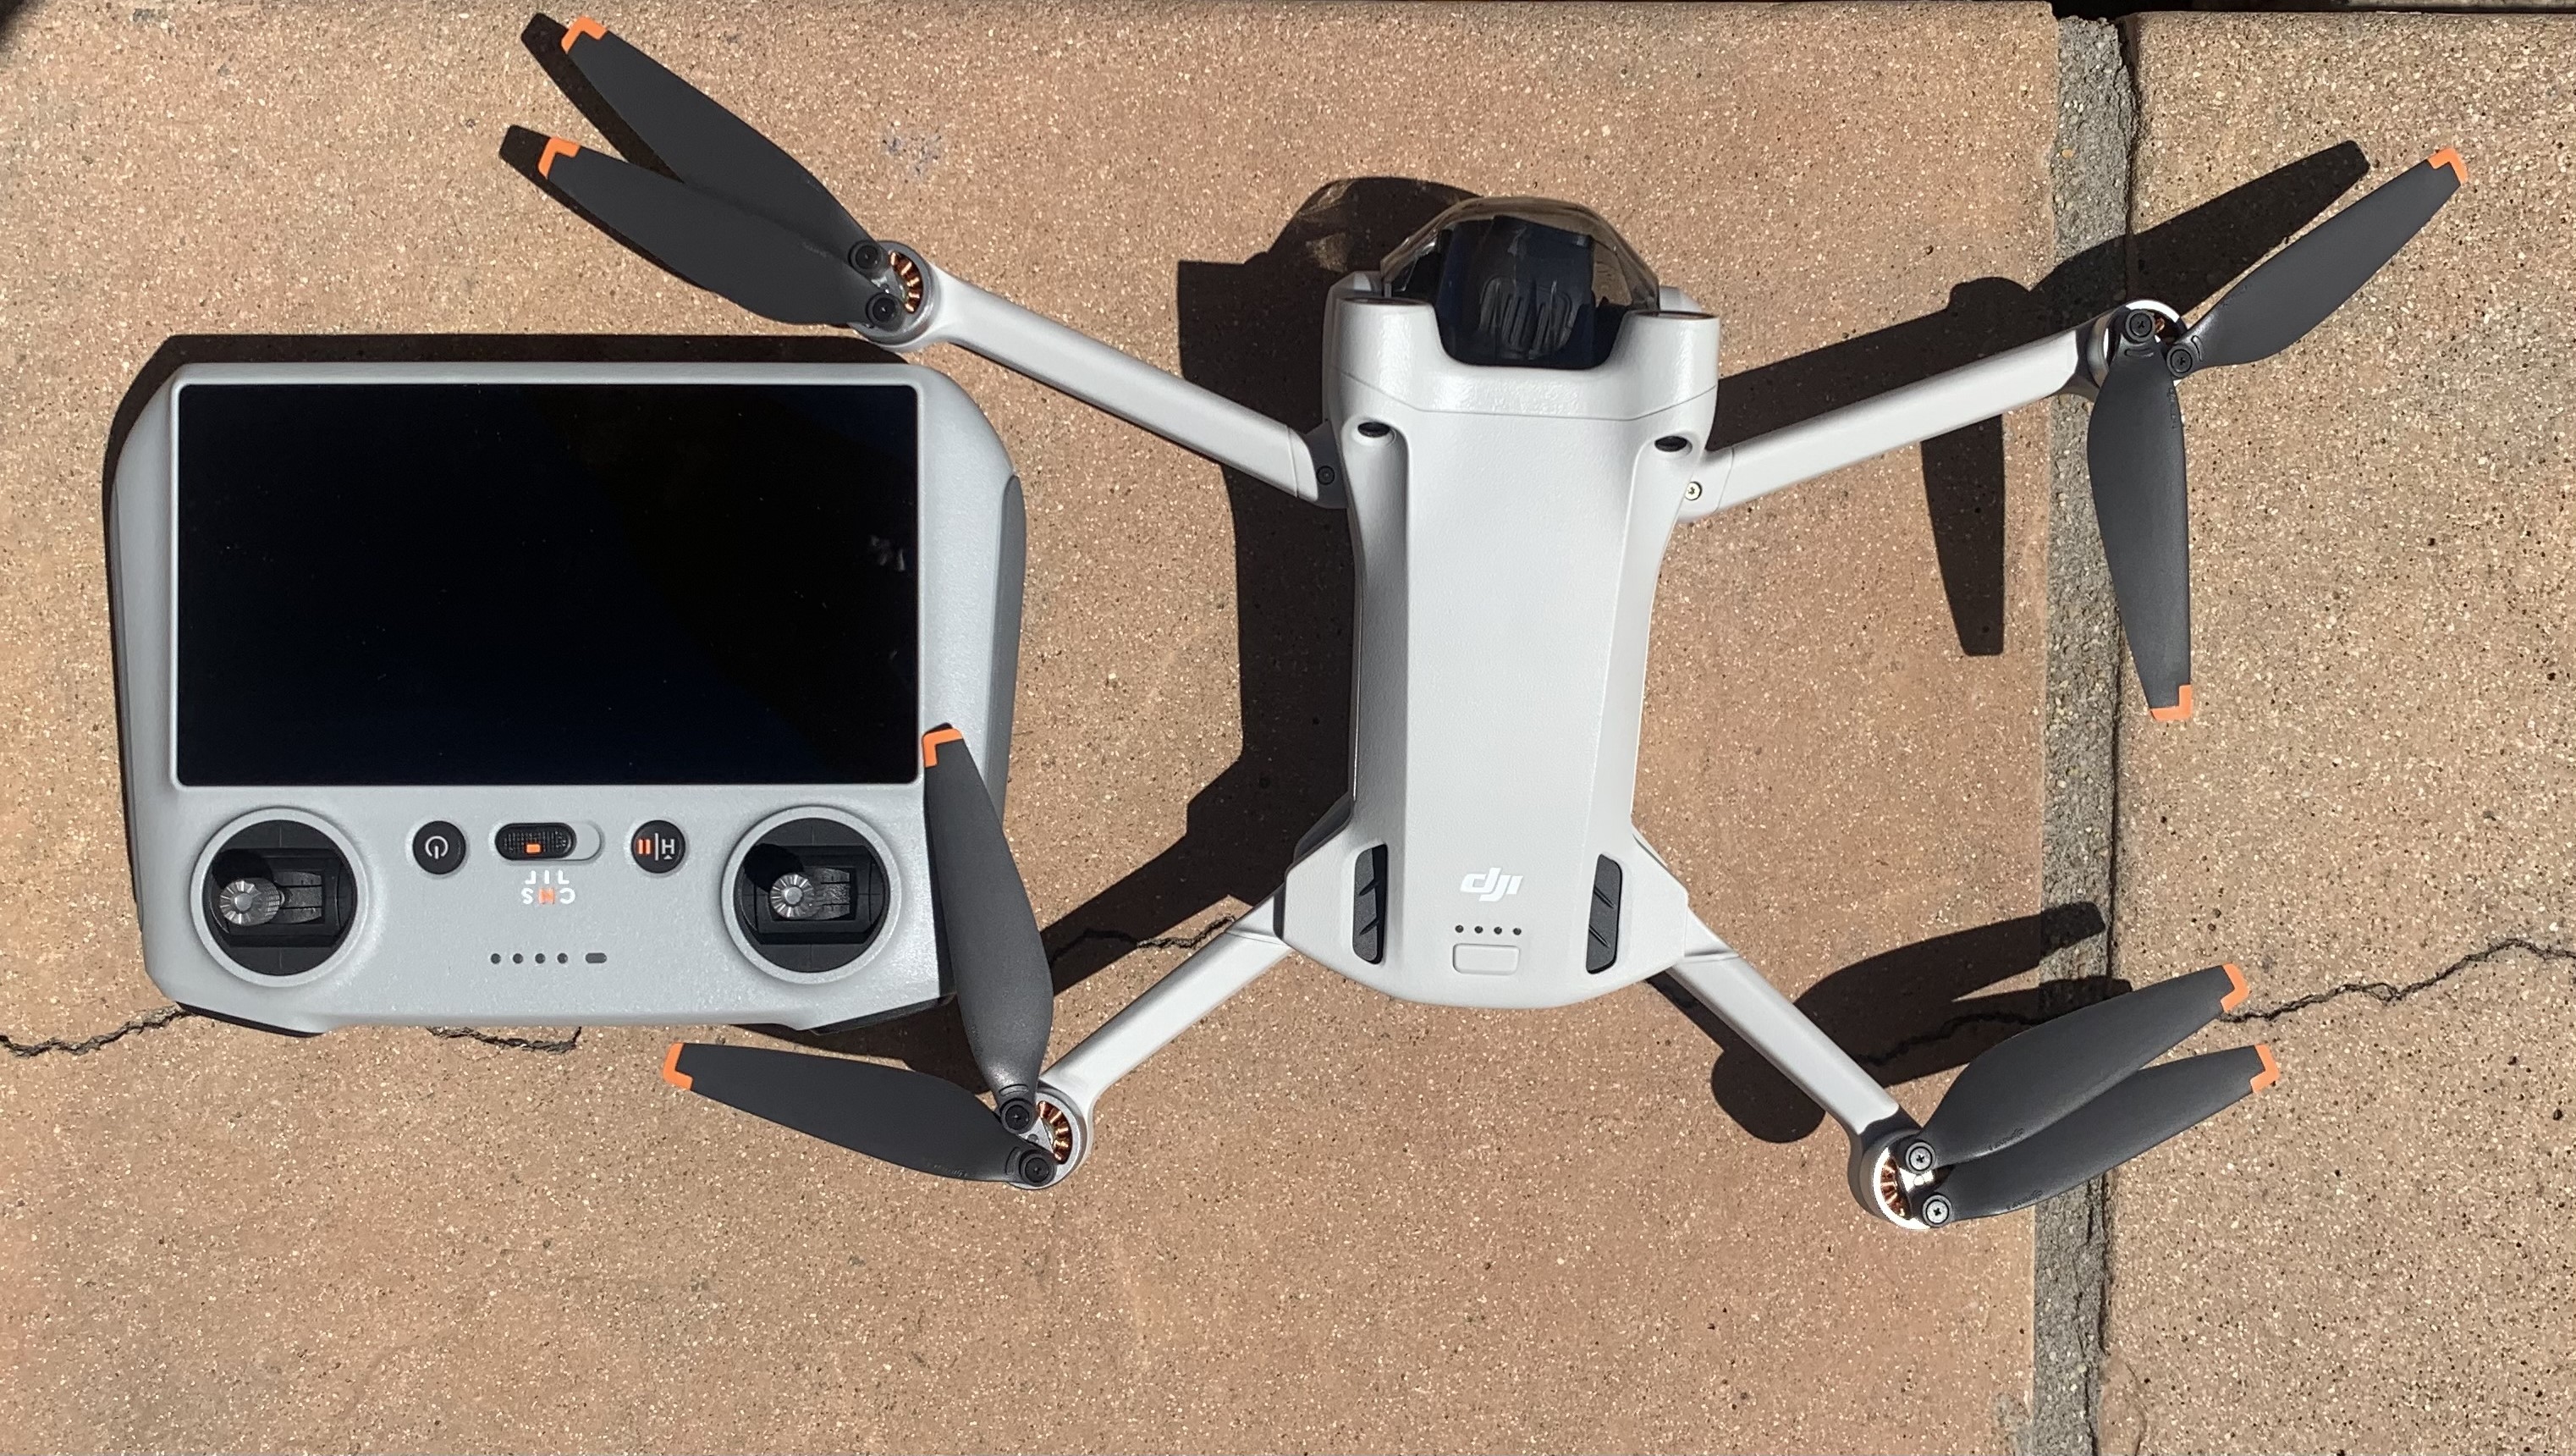 Drone Equipment 